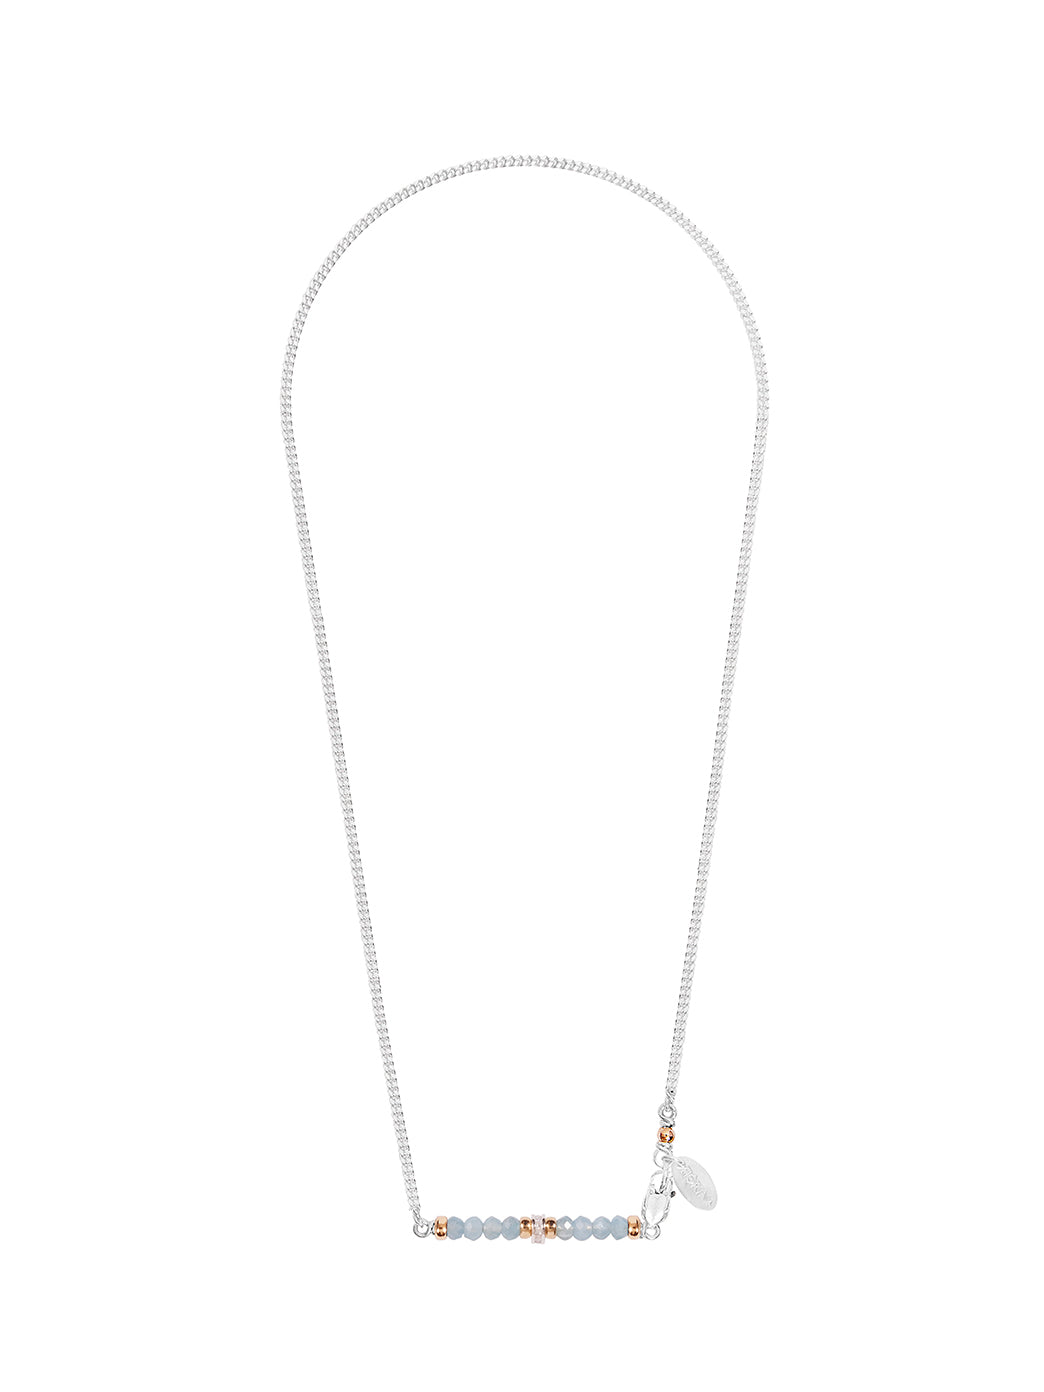 Fiorina Jewellery Silver Romance Necklace Aquamarine